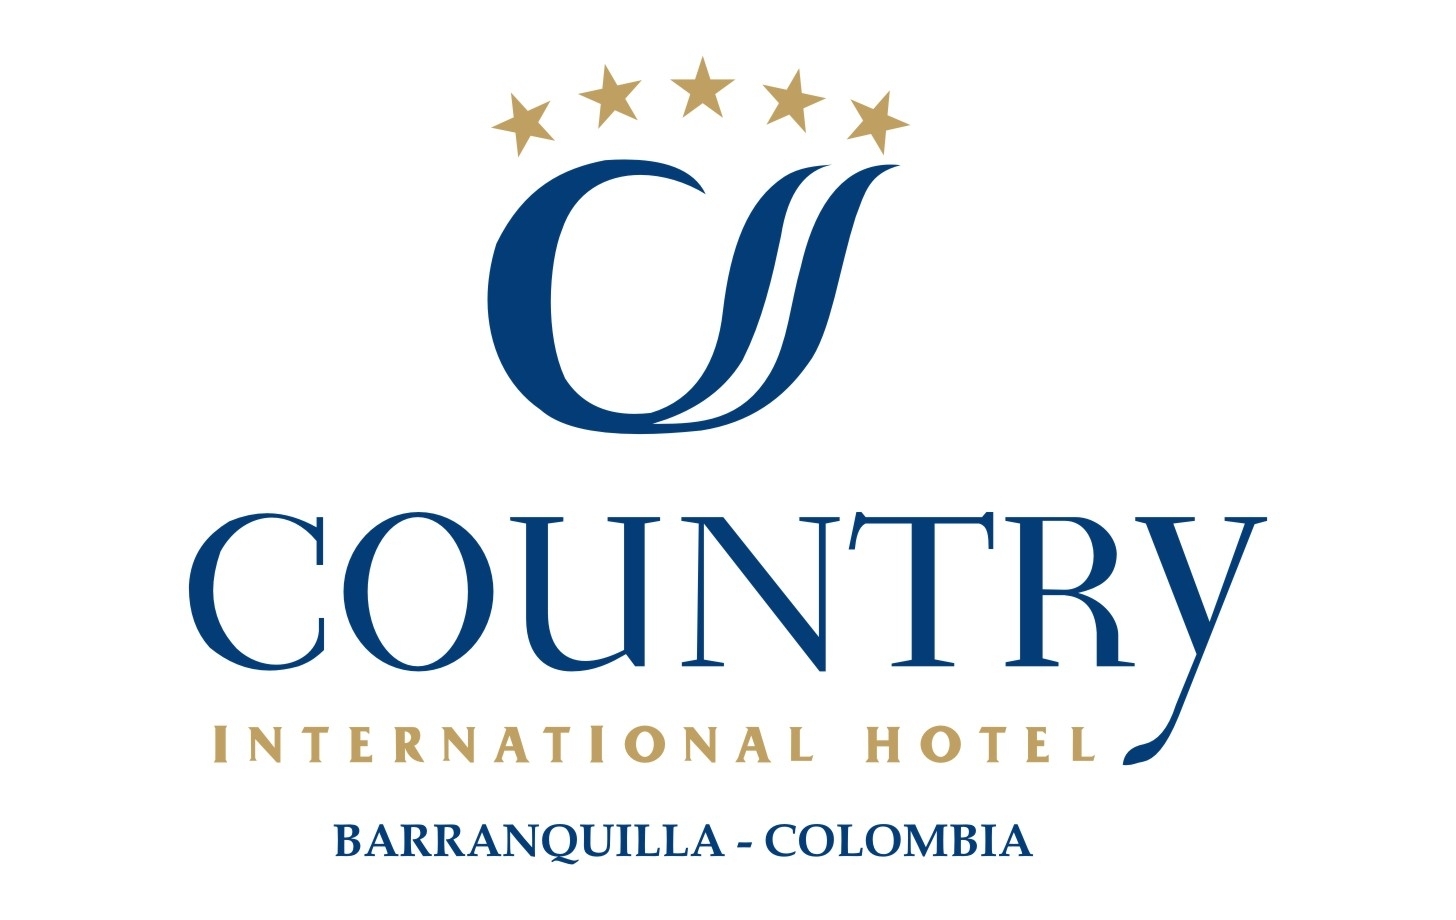 COUNTRY INTERNACIONAL HOTEL LTDA